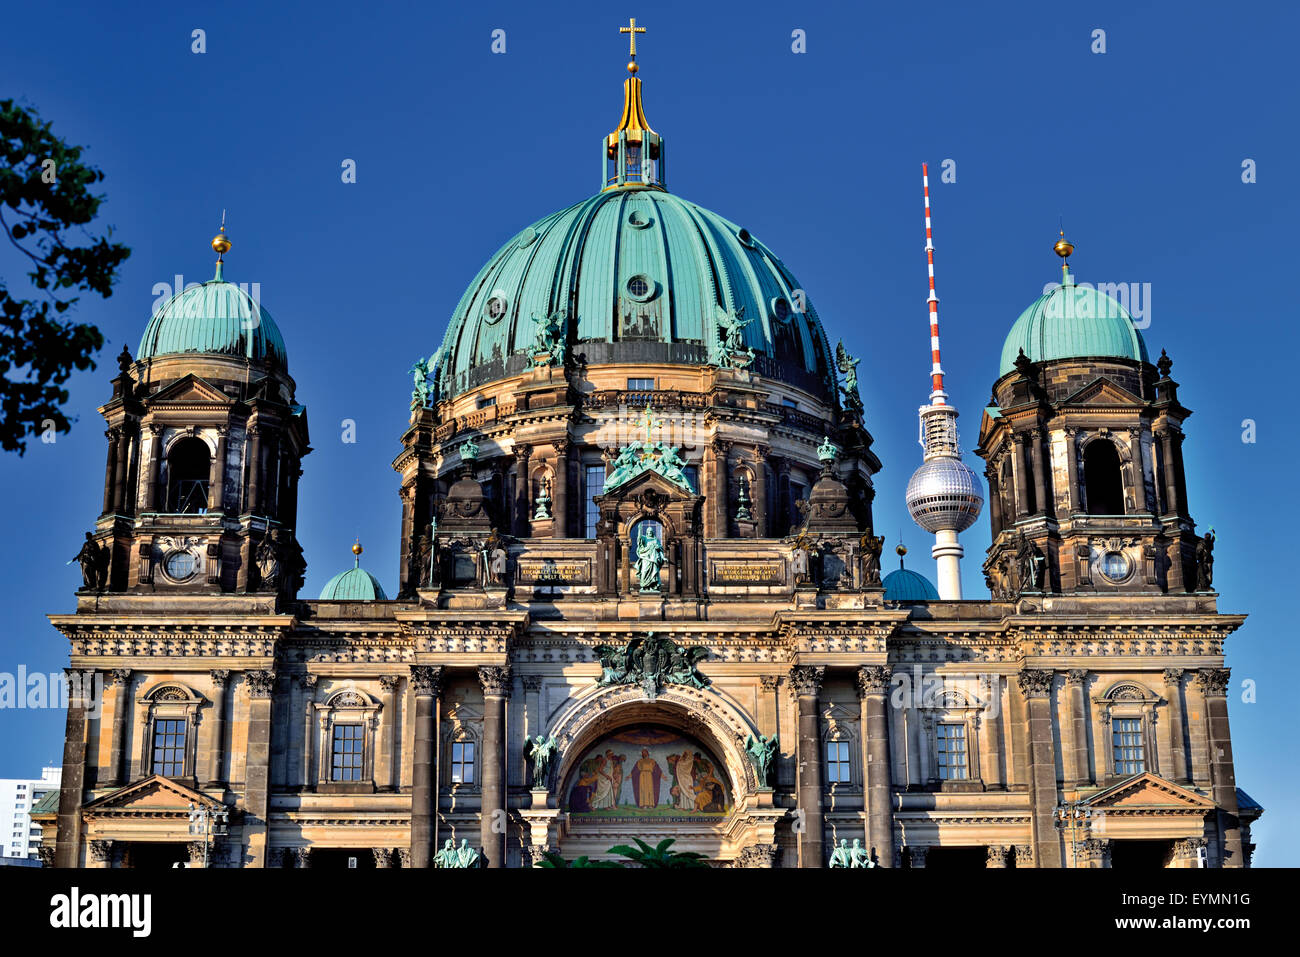 Alemania, Berlín: vista frontal de la iglesia de la Catedral de Berlín Foto de stock